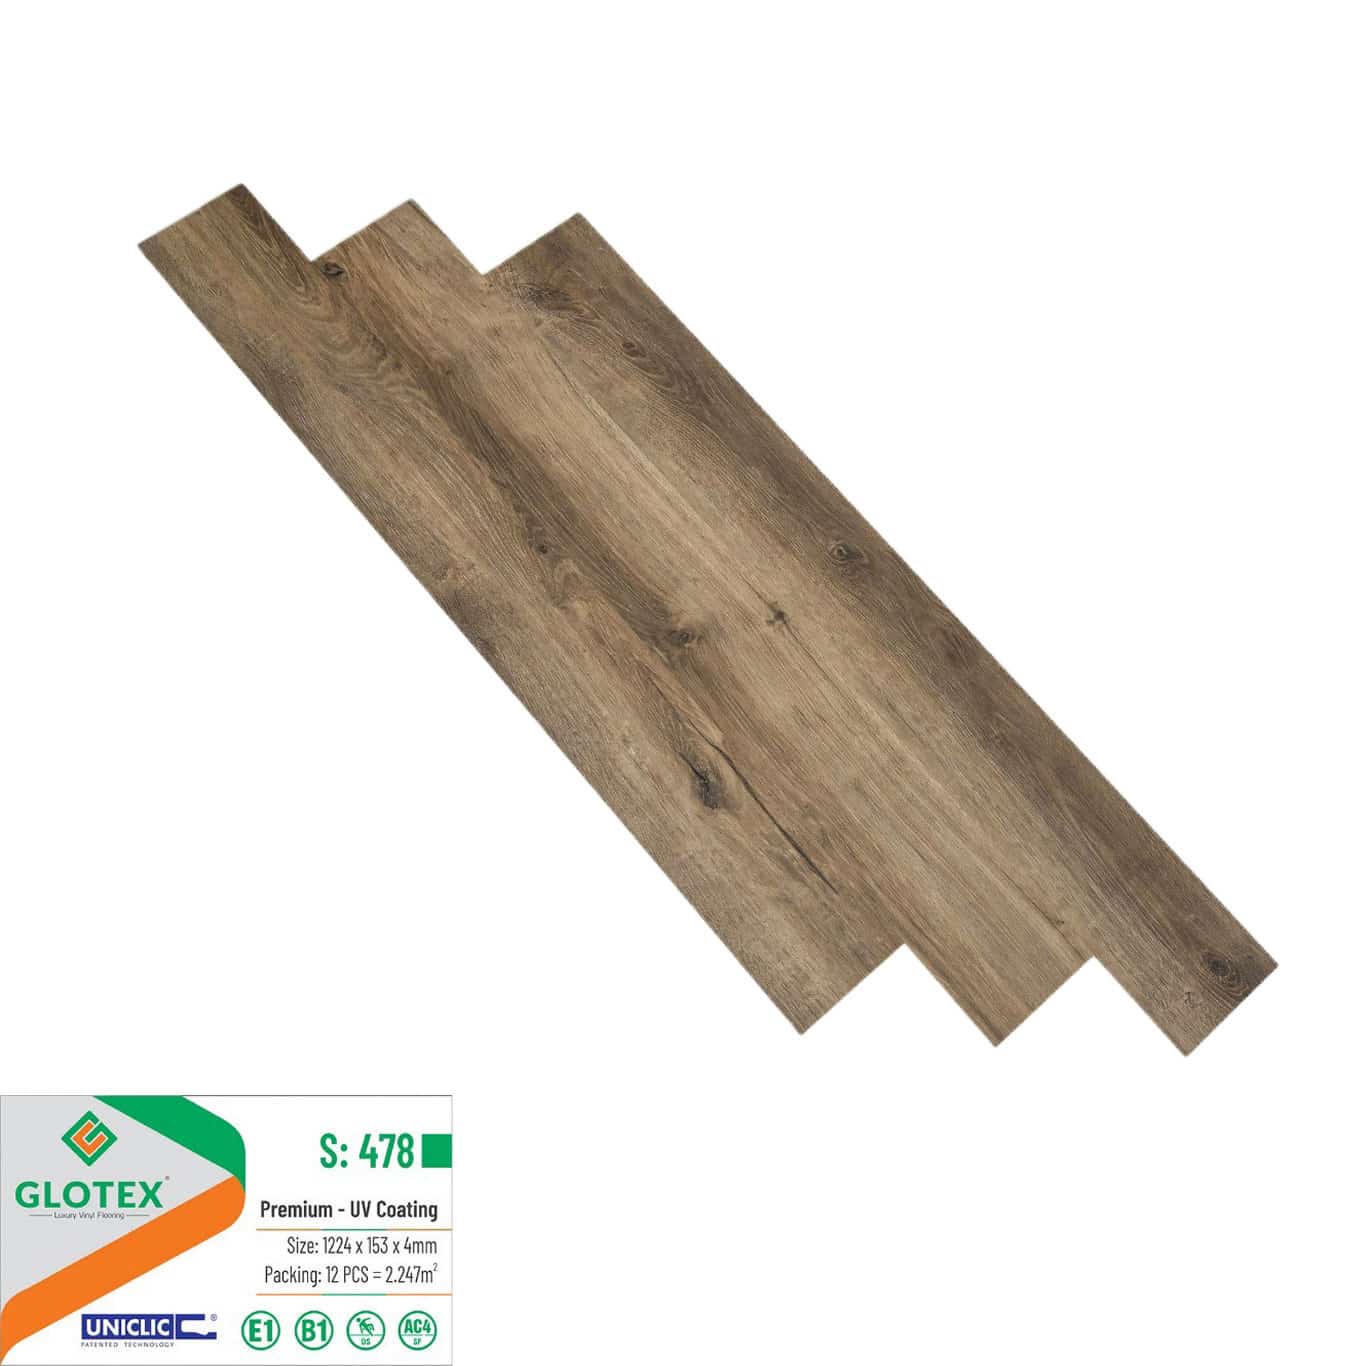 Sàn nhựa giả gỗ Glotex S478